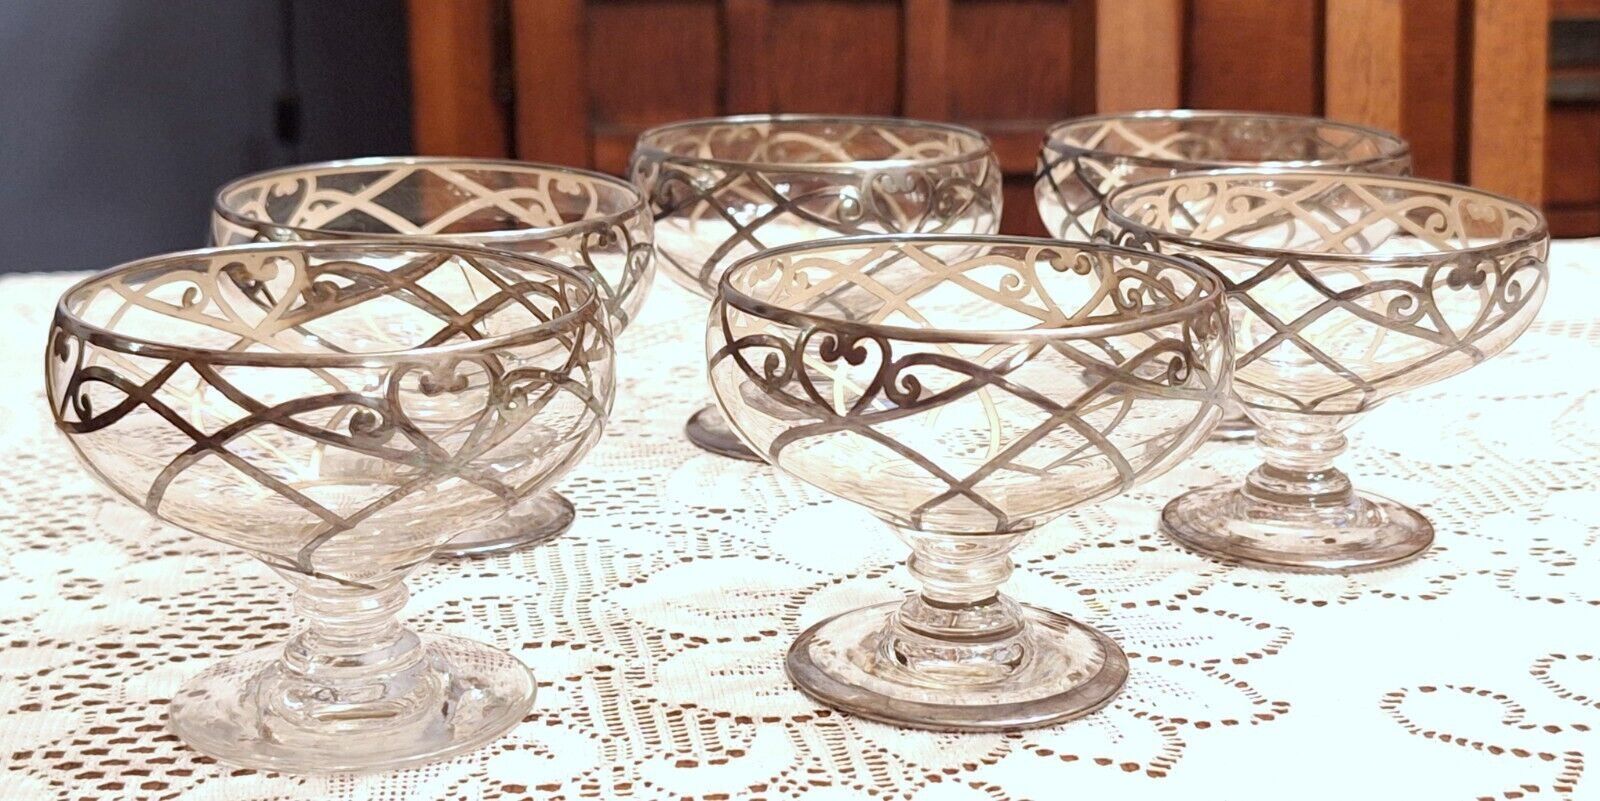 Antique Silver Overlay Champagne or Sherbert Dessert Handblown Glasses, 1920s